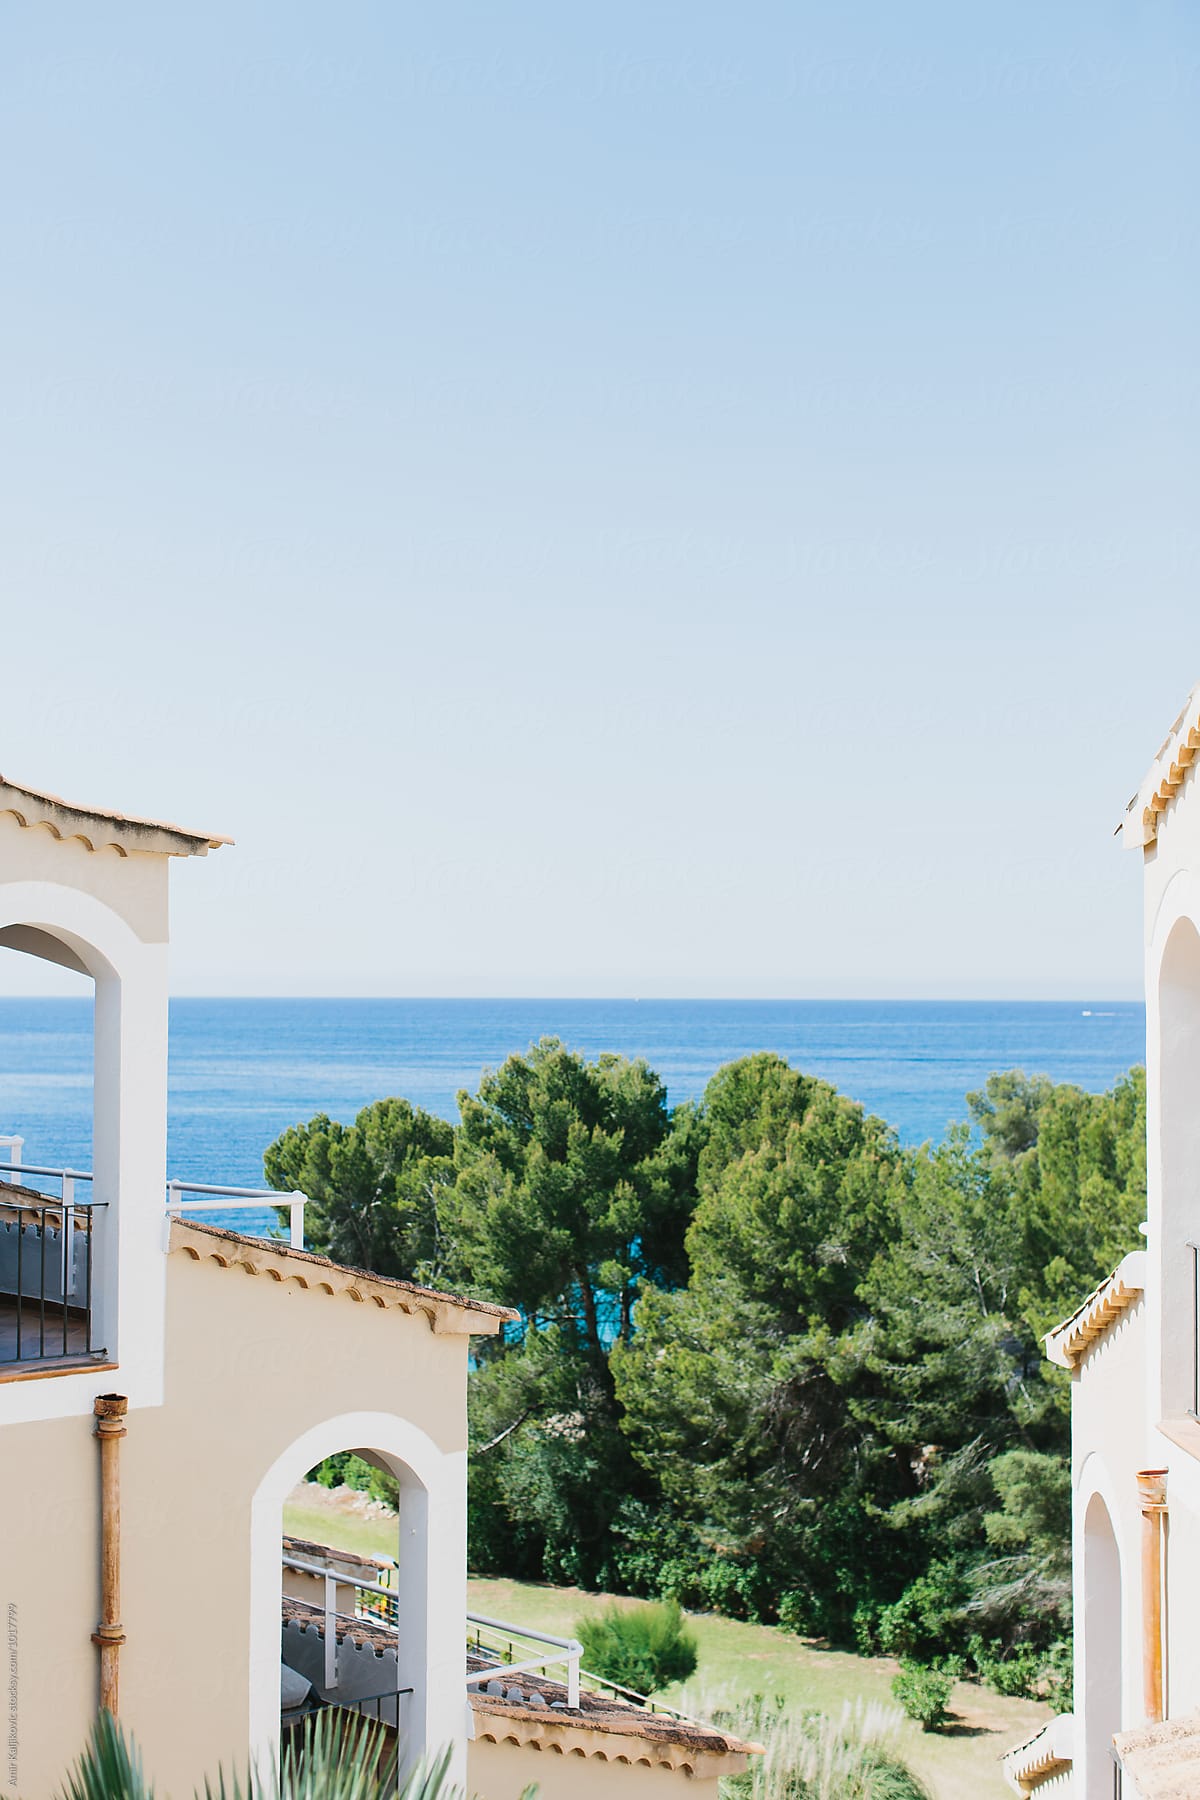 View of ocean from resort in Majorca